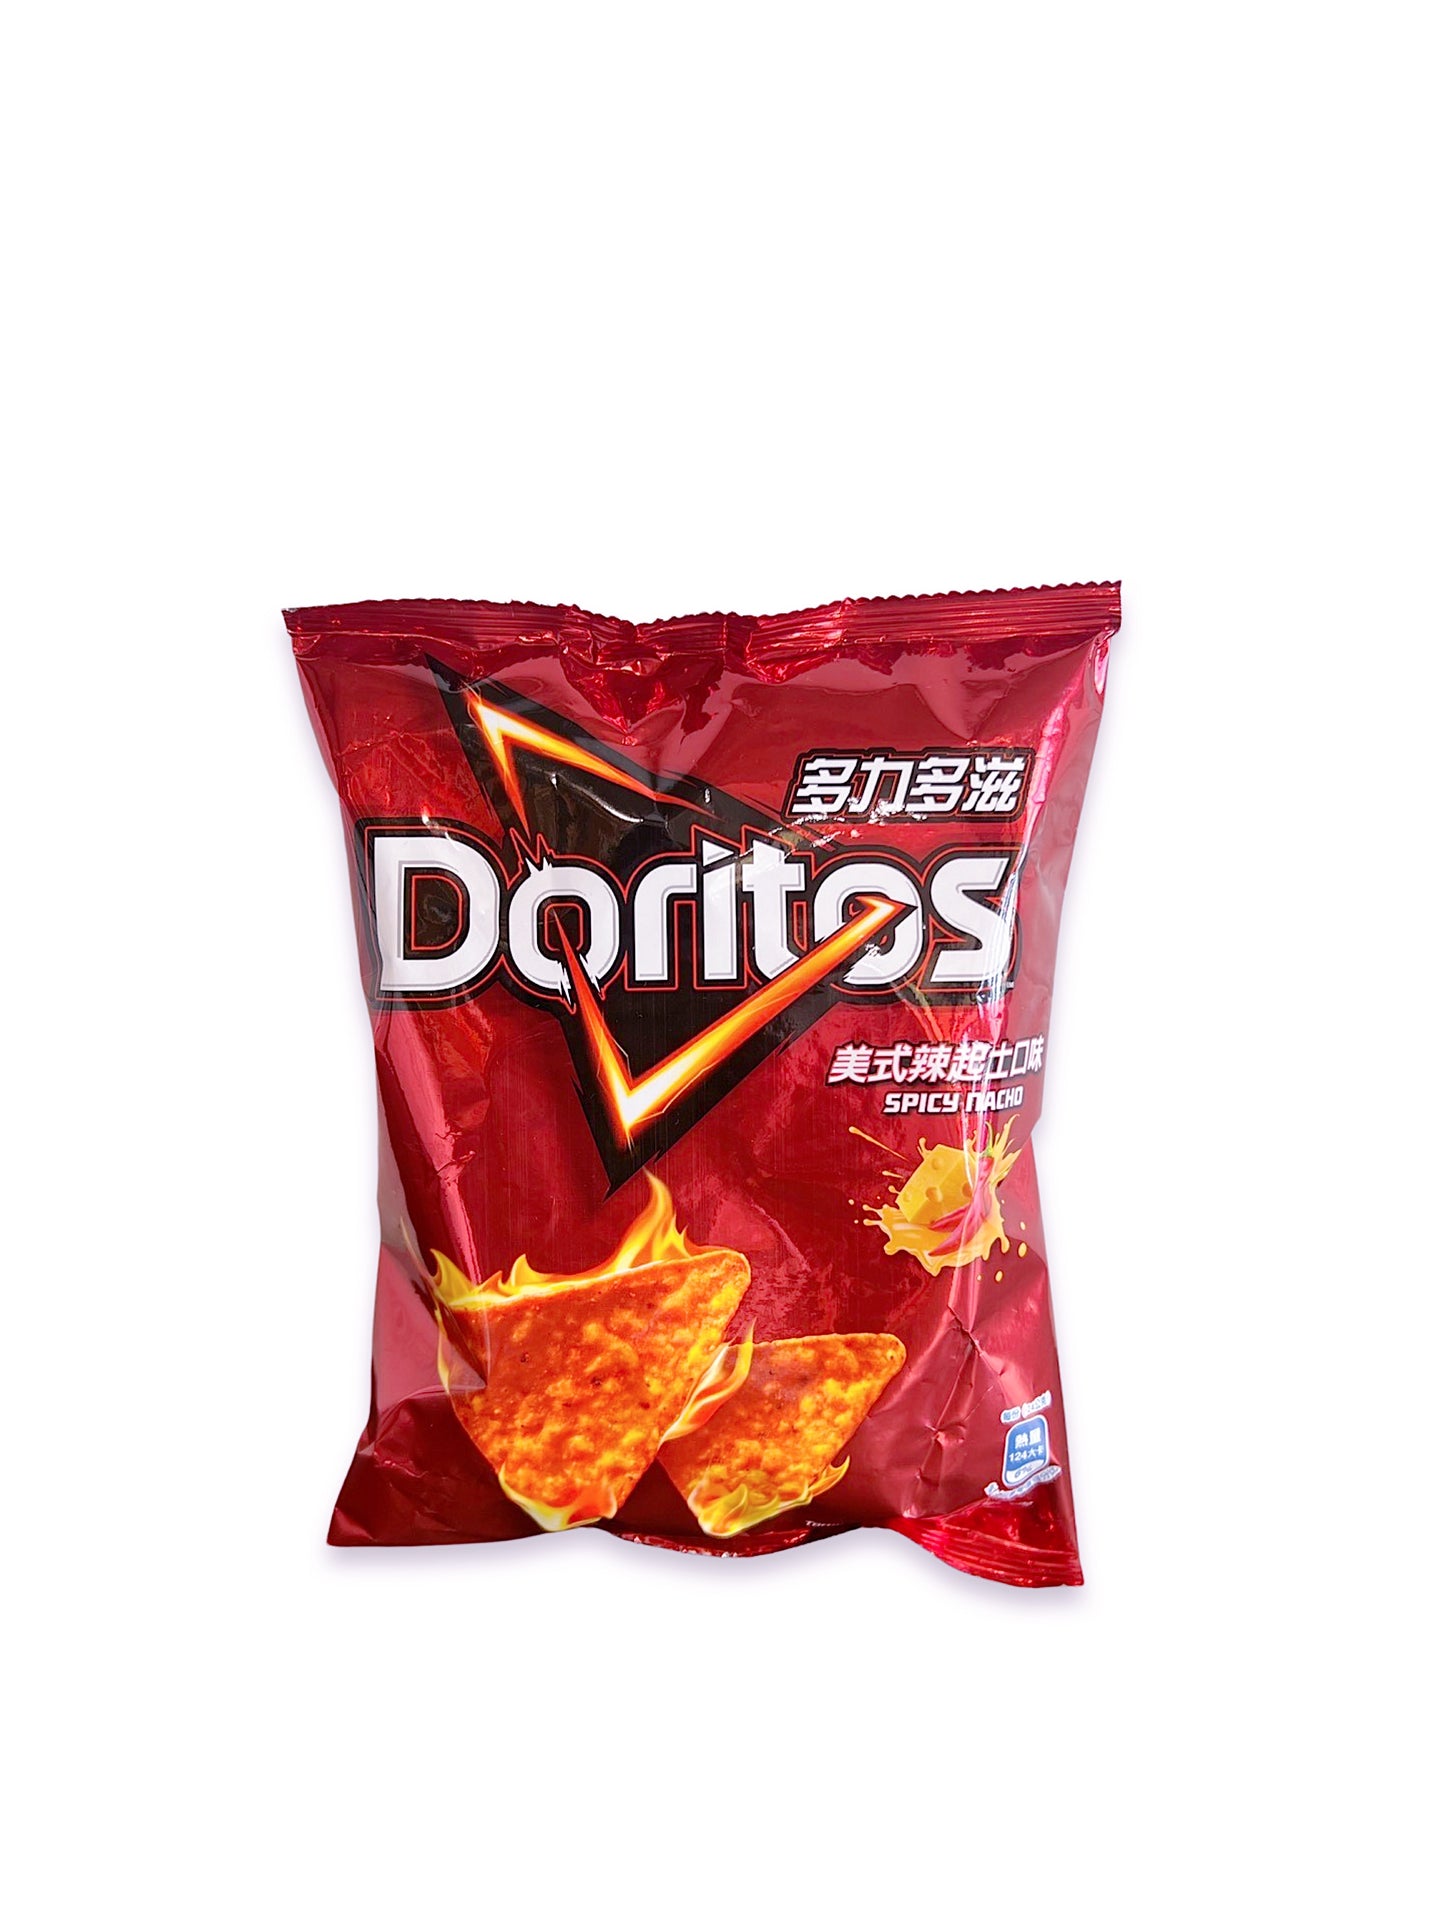 Doritos Chips - Spicy Nacho Flavor